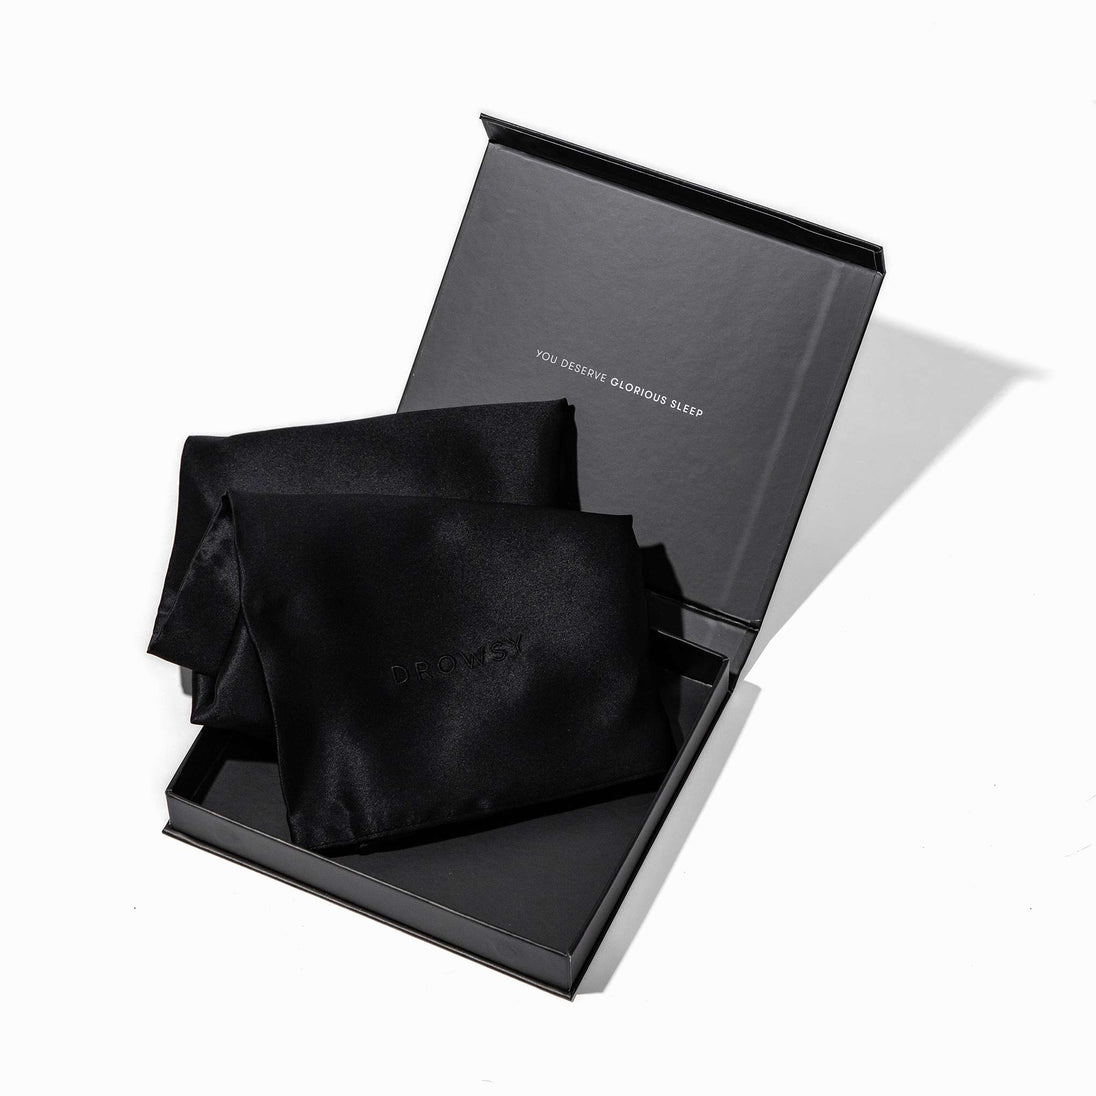 Black pillowcase box opening with black silk pillowcase inside